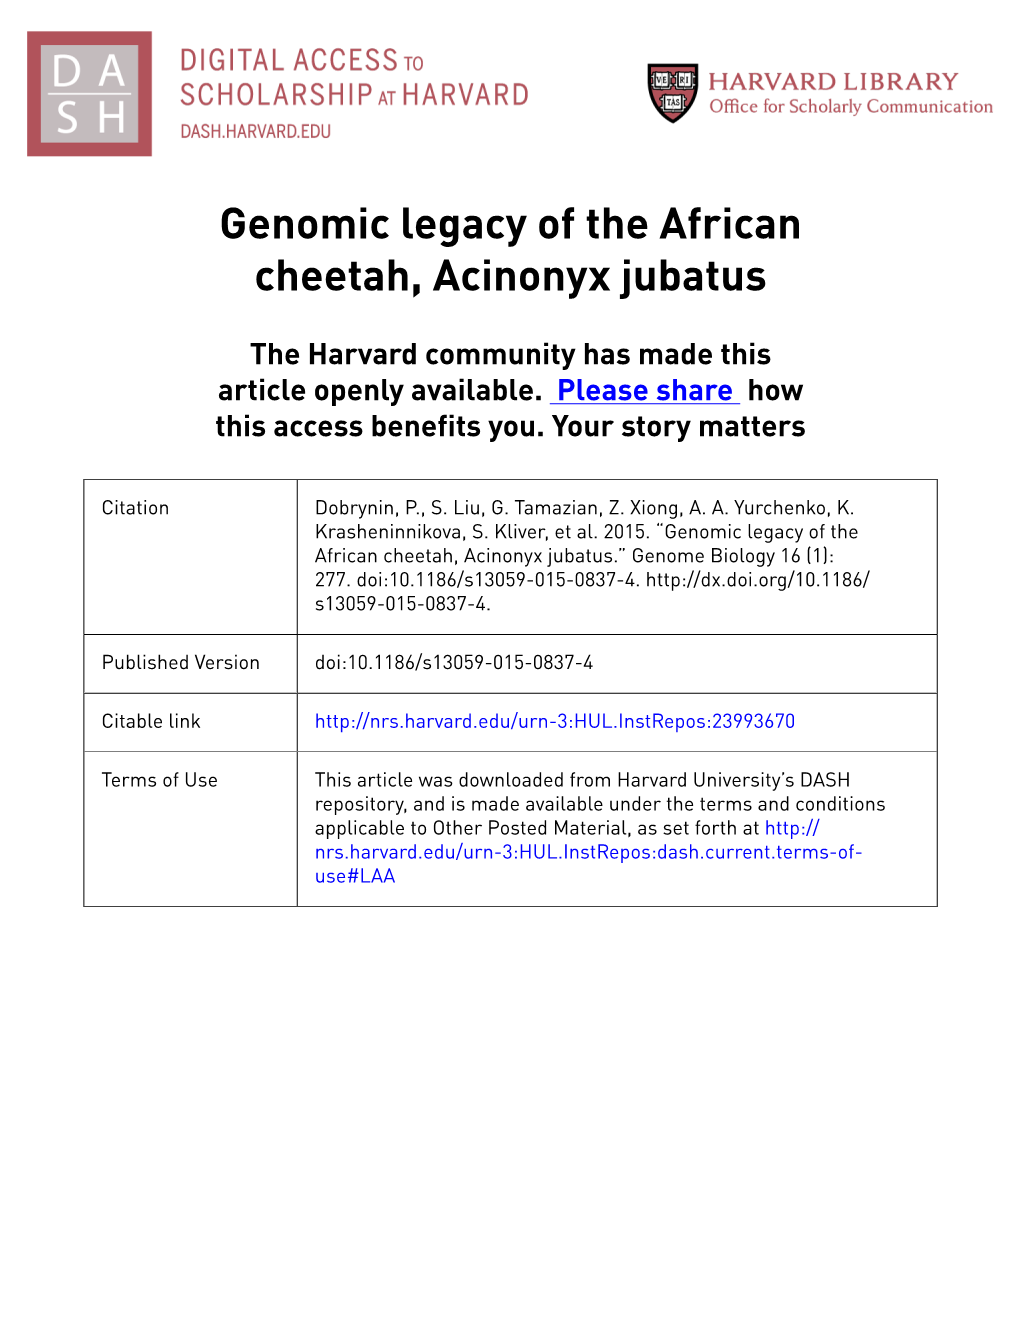 Genomic Legacy of the African Cheetah, Acinonyx Jubatus